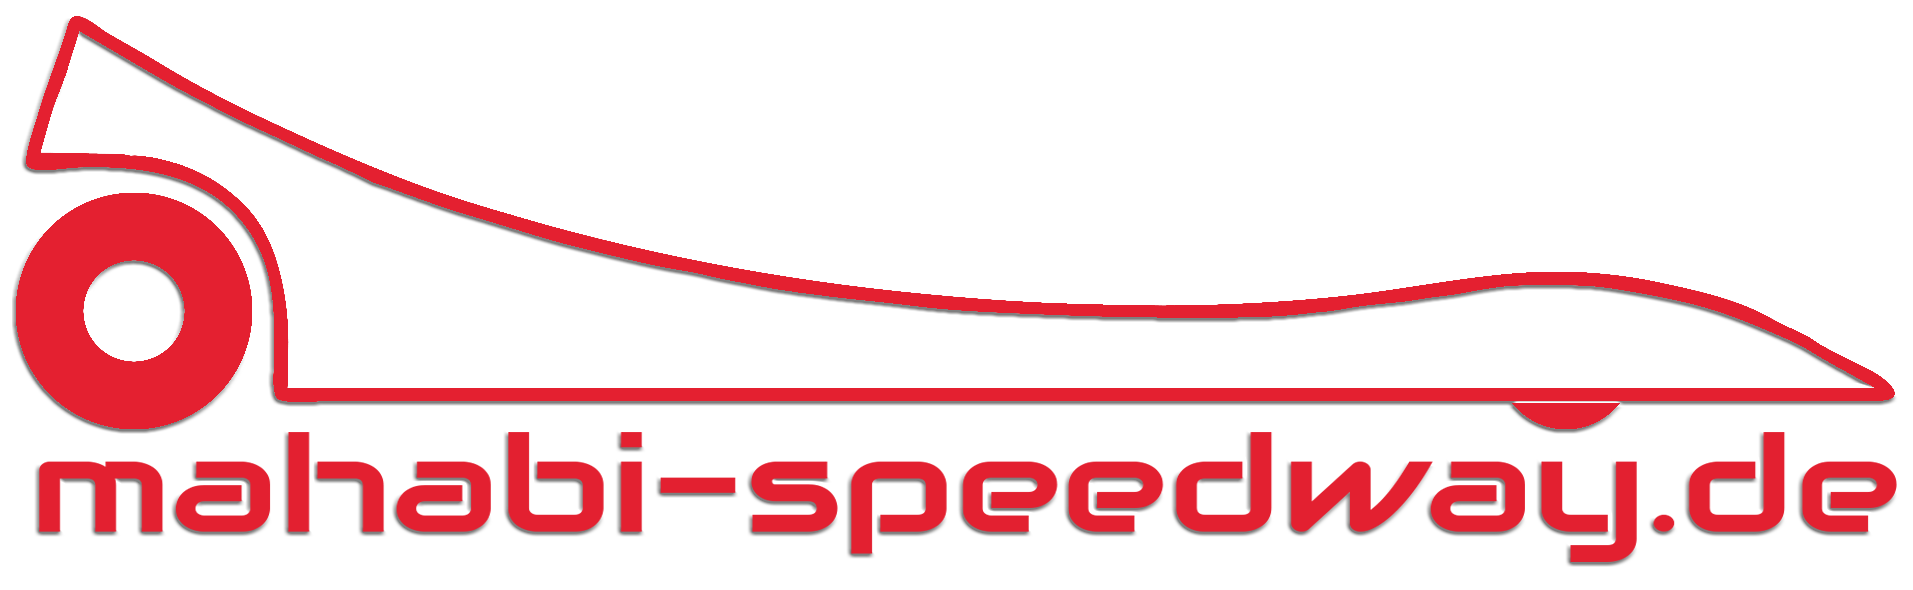 mahabi speedway logo